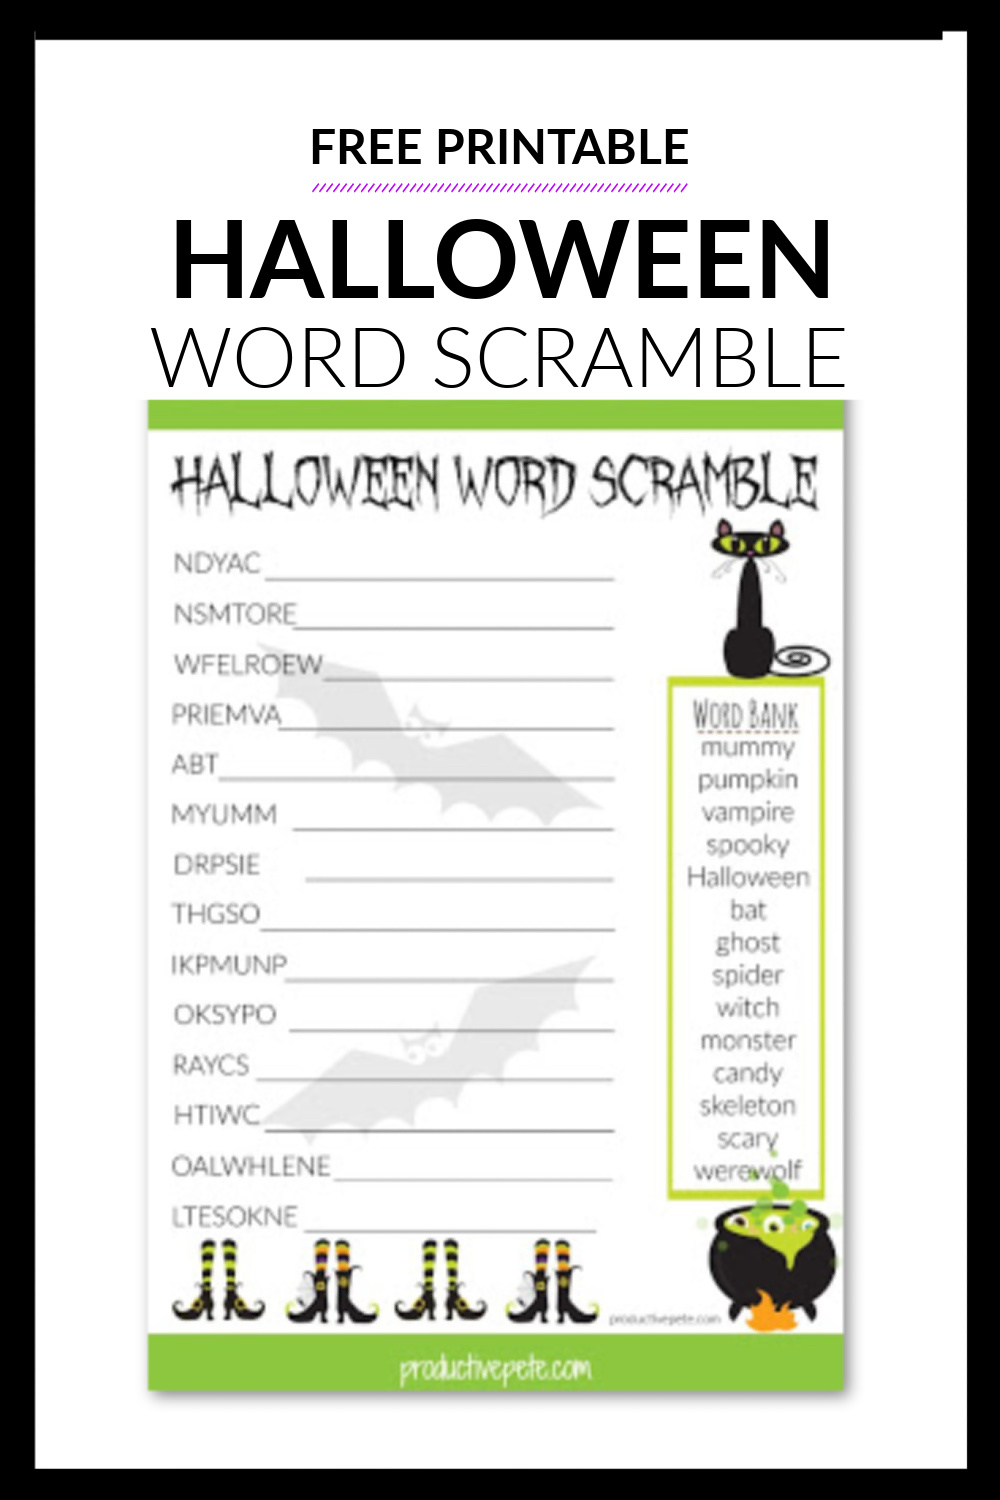 free-printable-halloween-word-scramble-pdf-for-kids-productive-pete